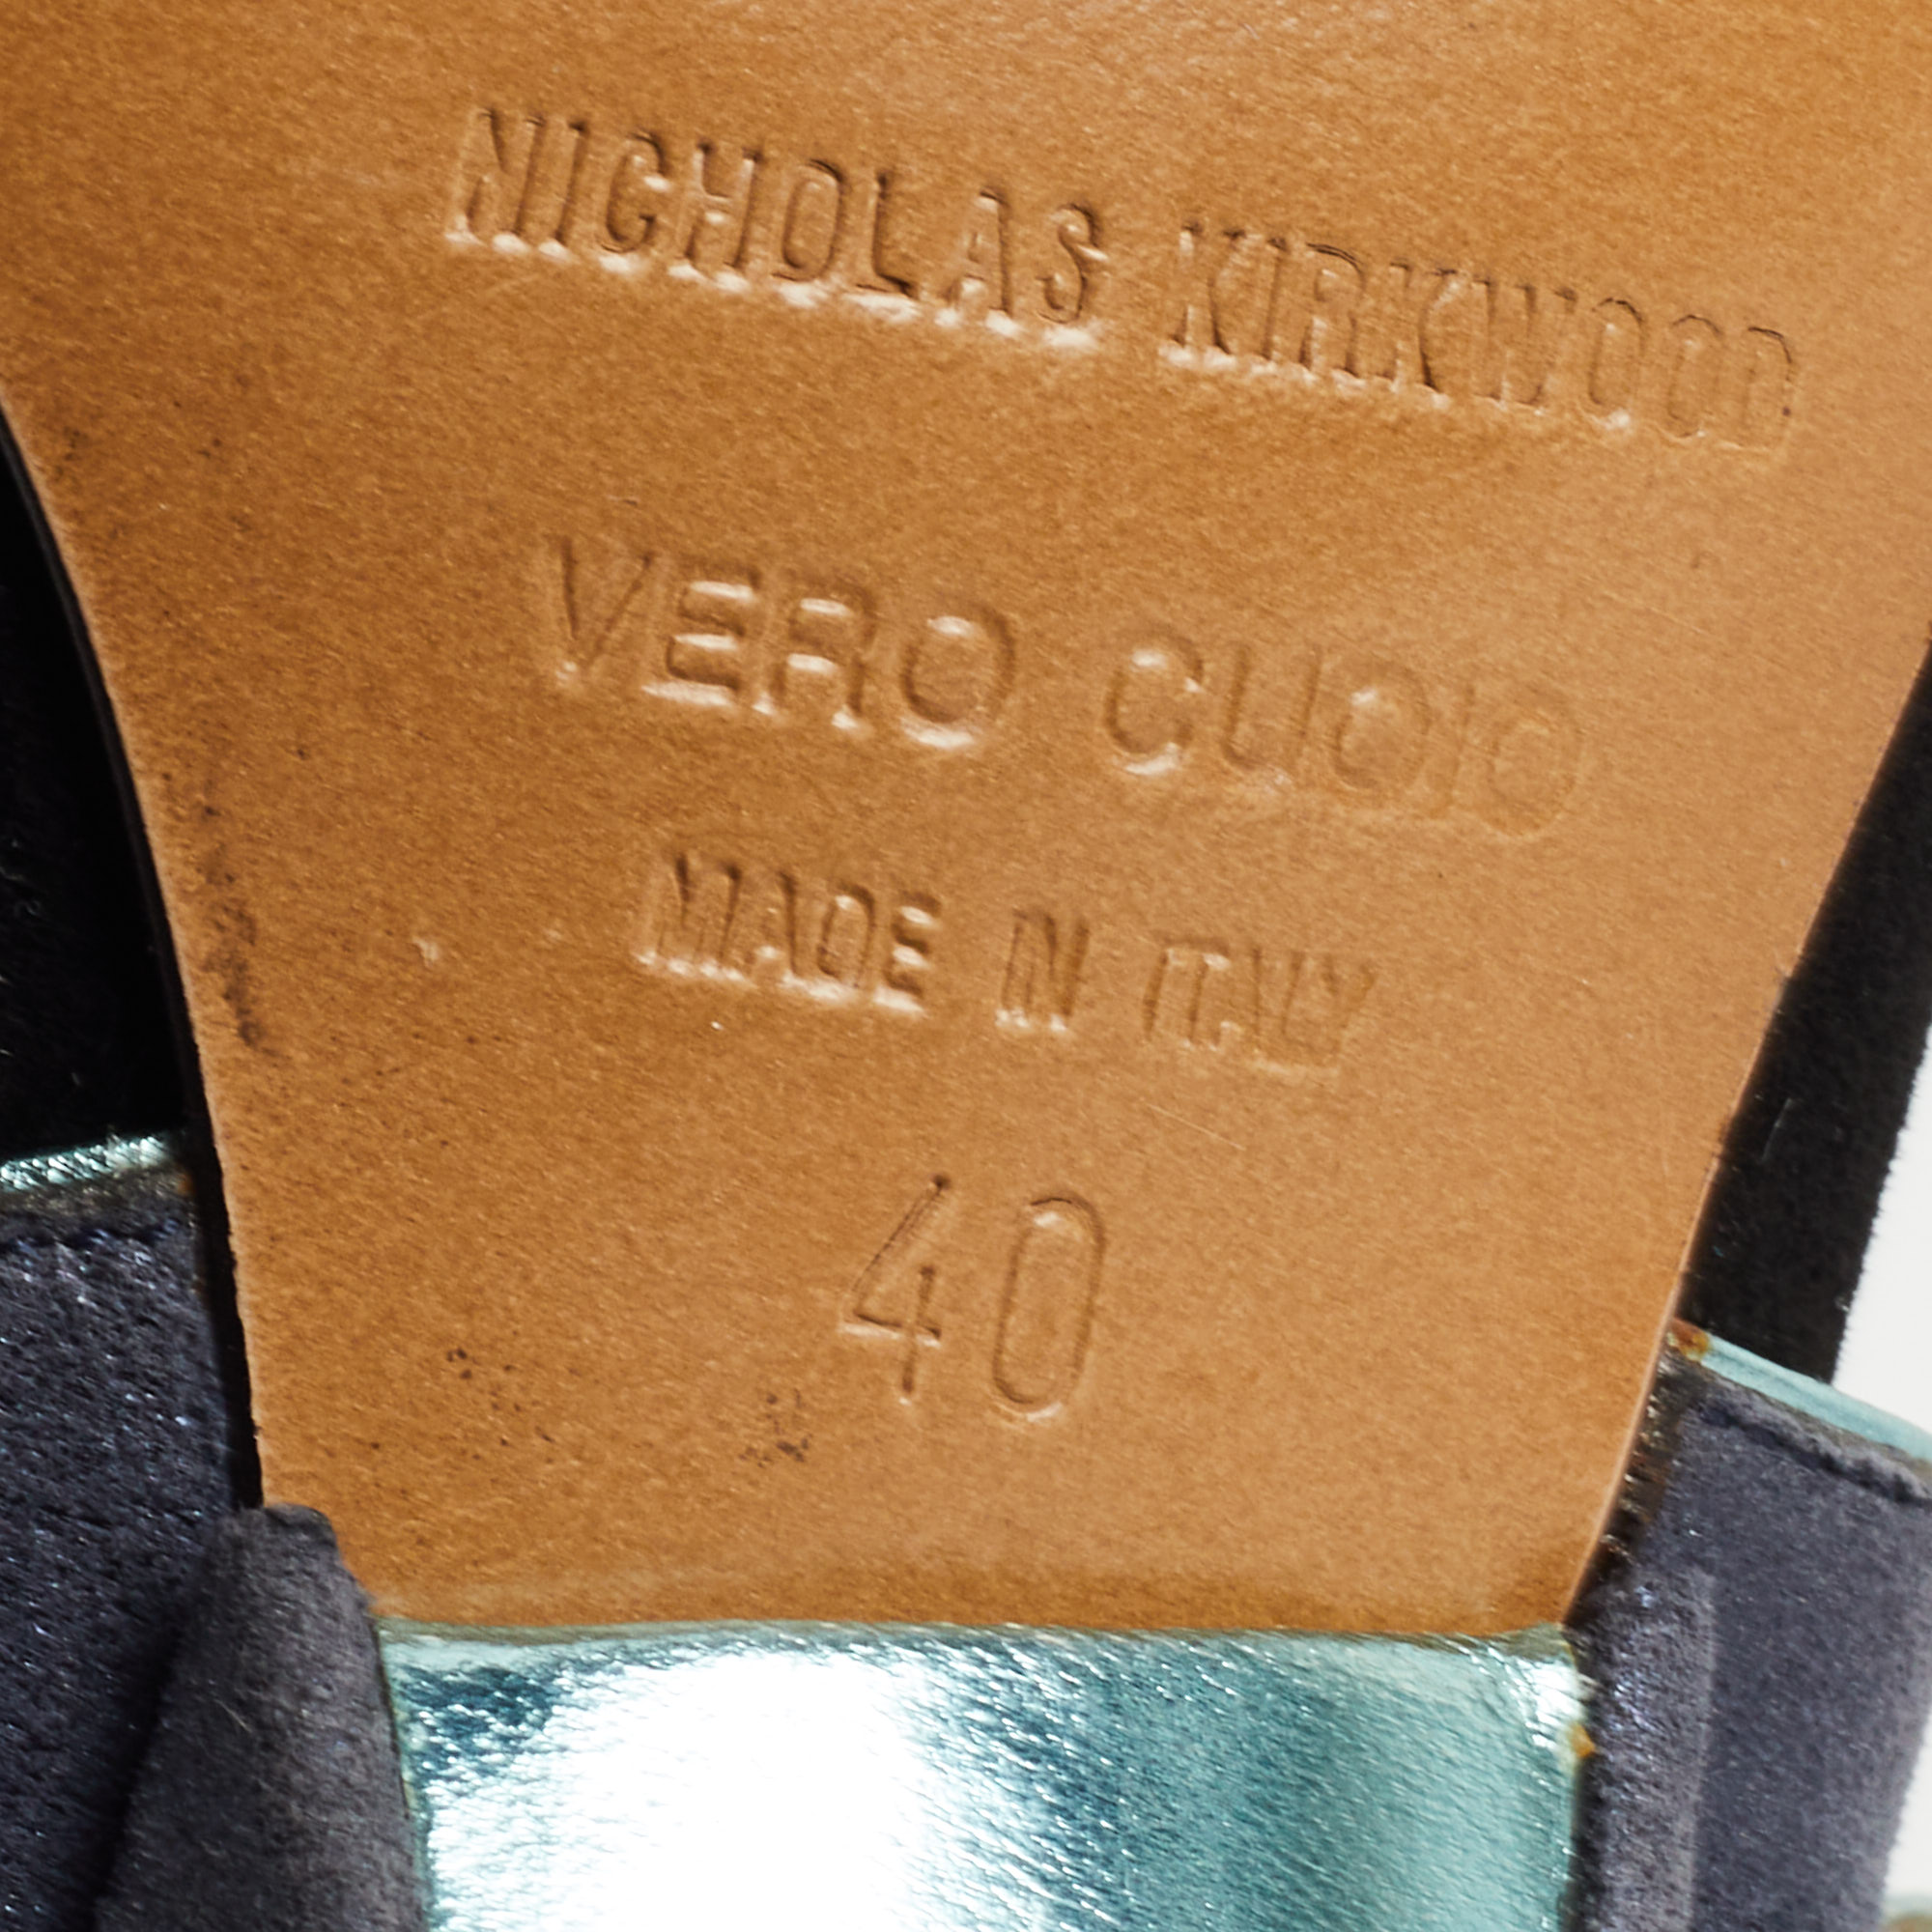 Nicholas Kirkwood Grey /Black Leather Ankle Strap Sandals Size 40